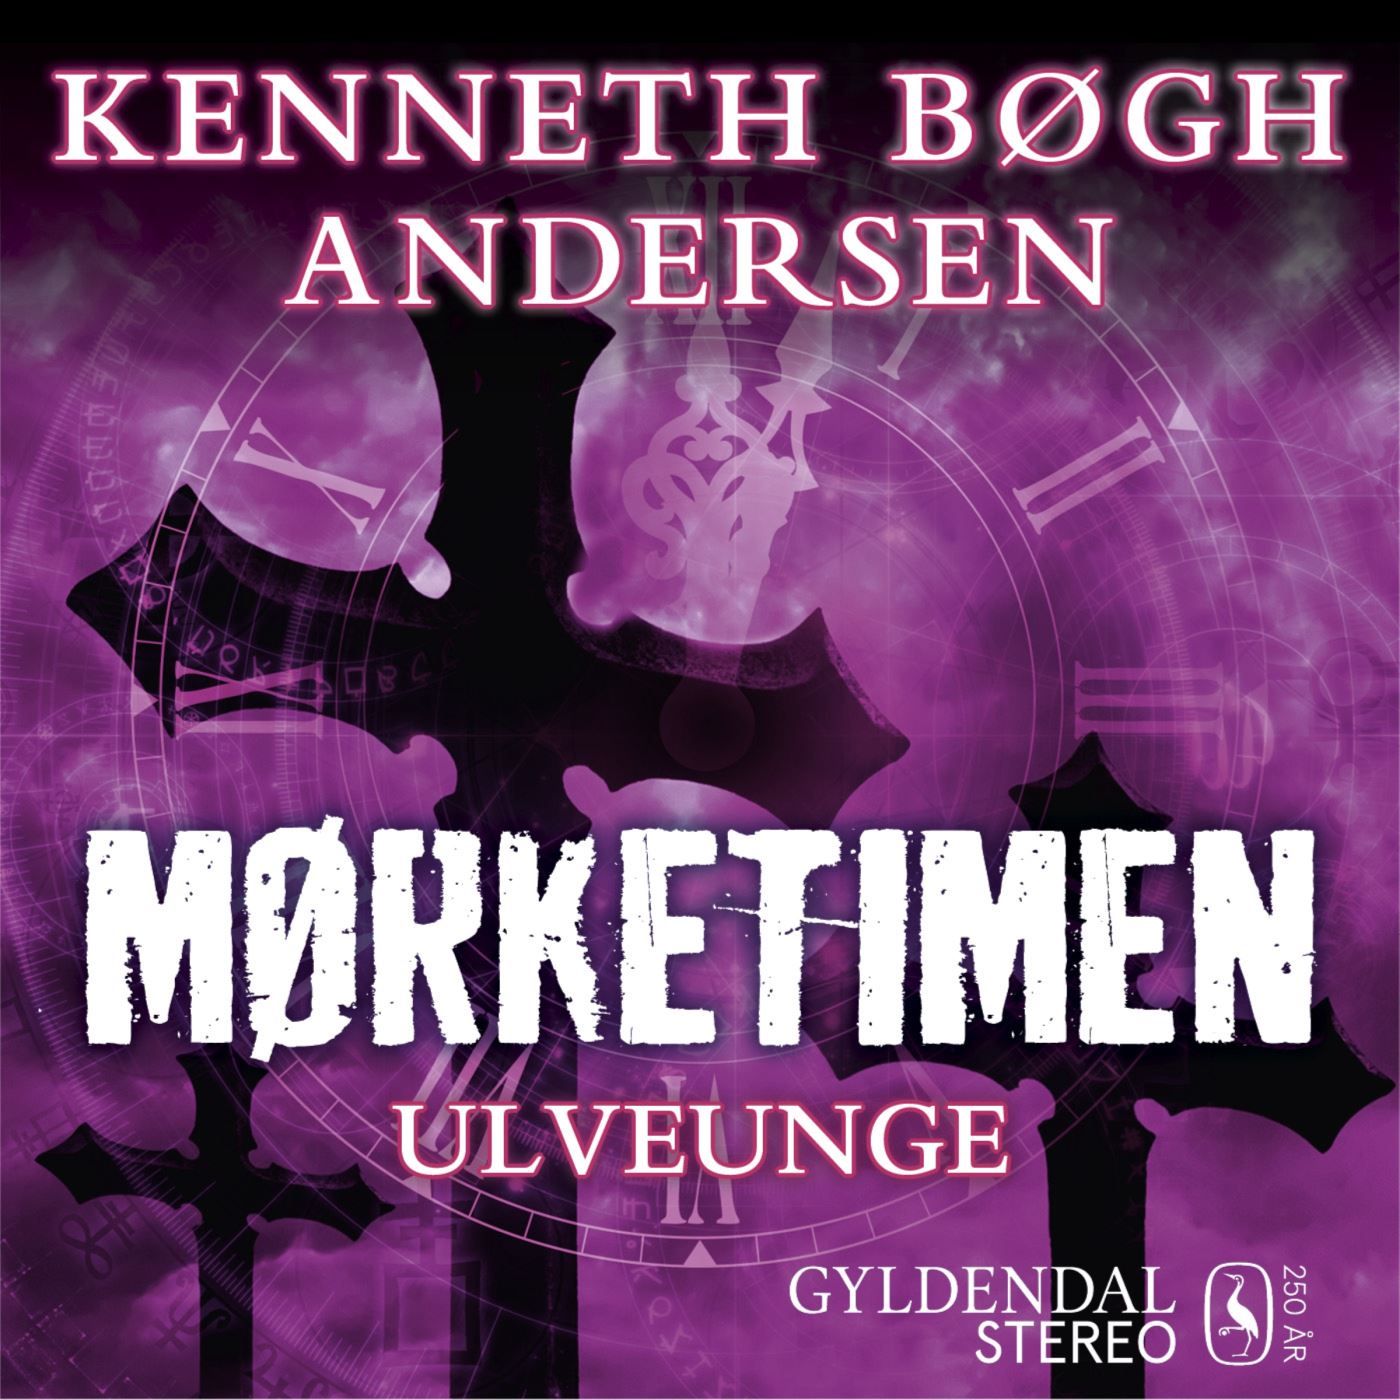 Mørketimen - Ulveunge, audiobook by Kenneth Bøgh Andersen